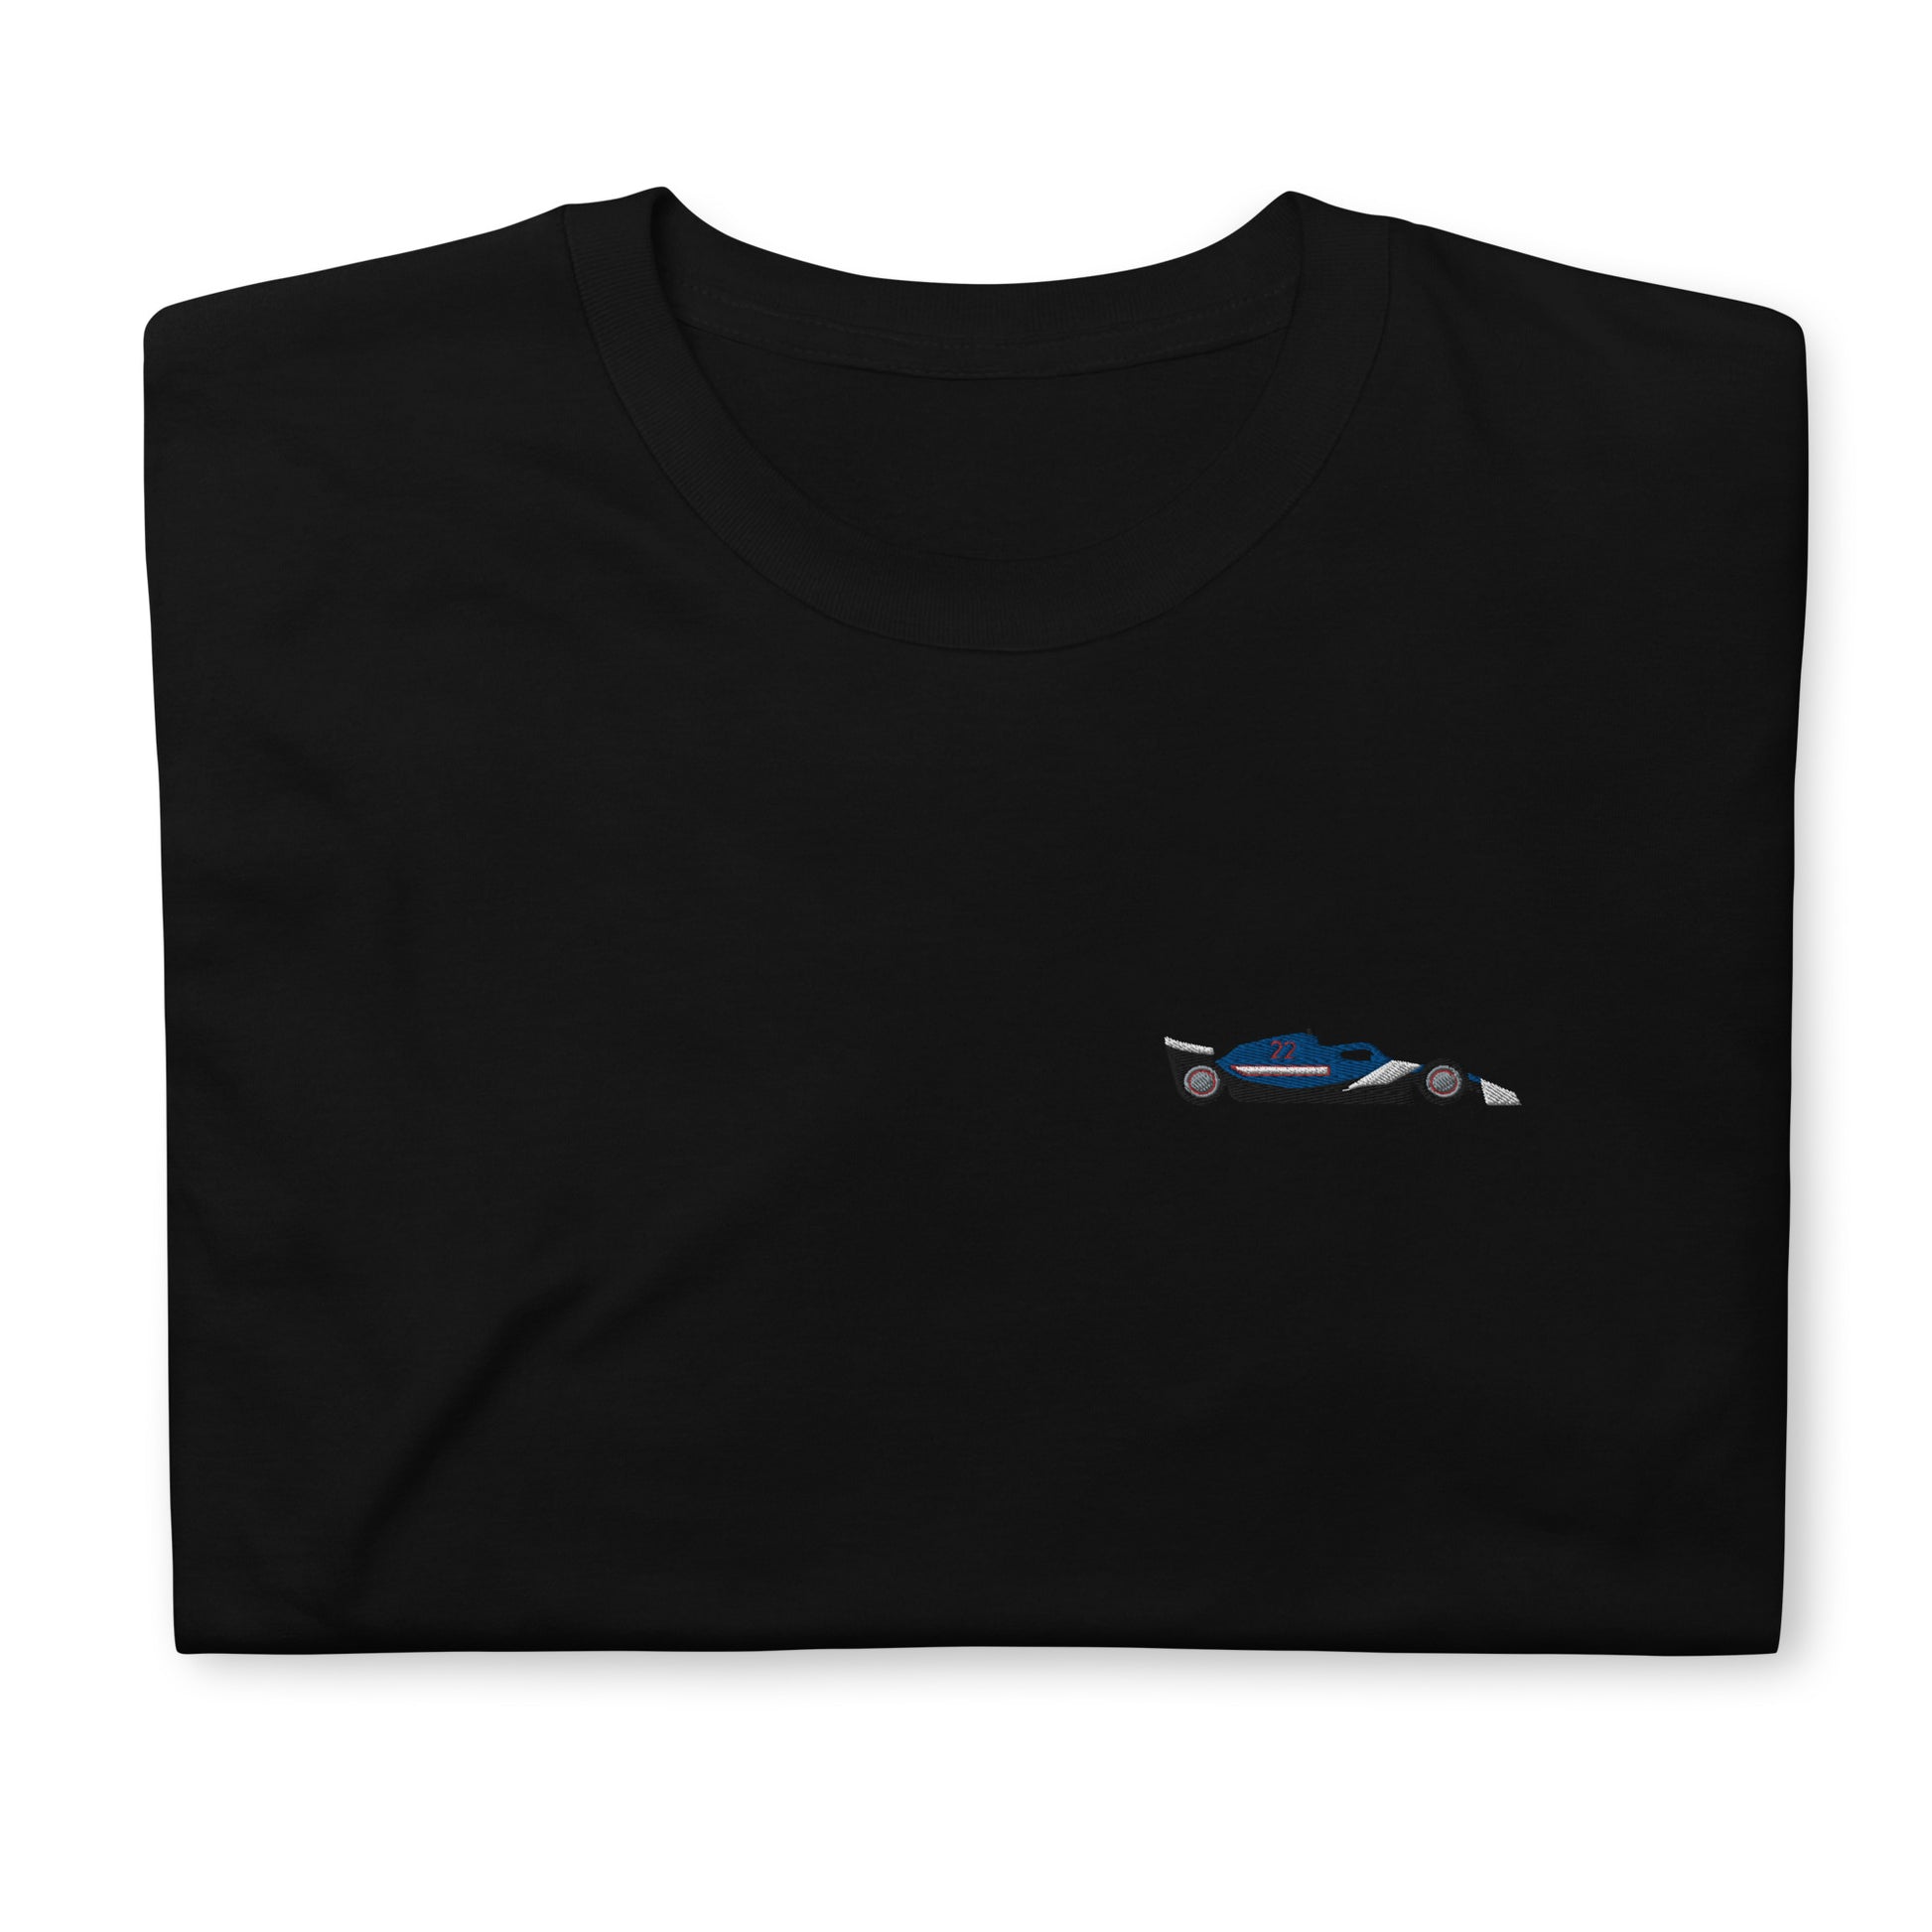 Yuki Tsunoda Embroidered Racing Bulls Car T-Shirt black